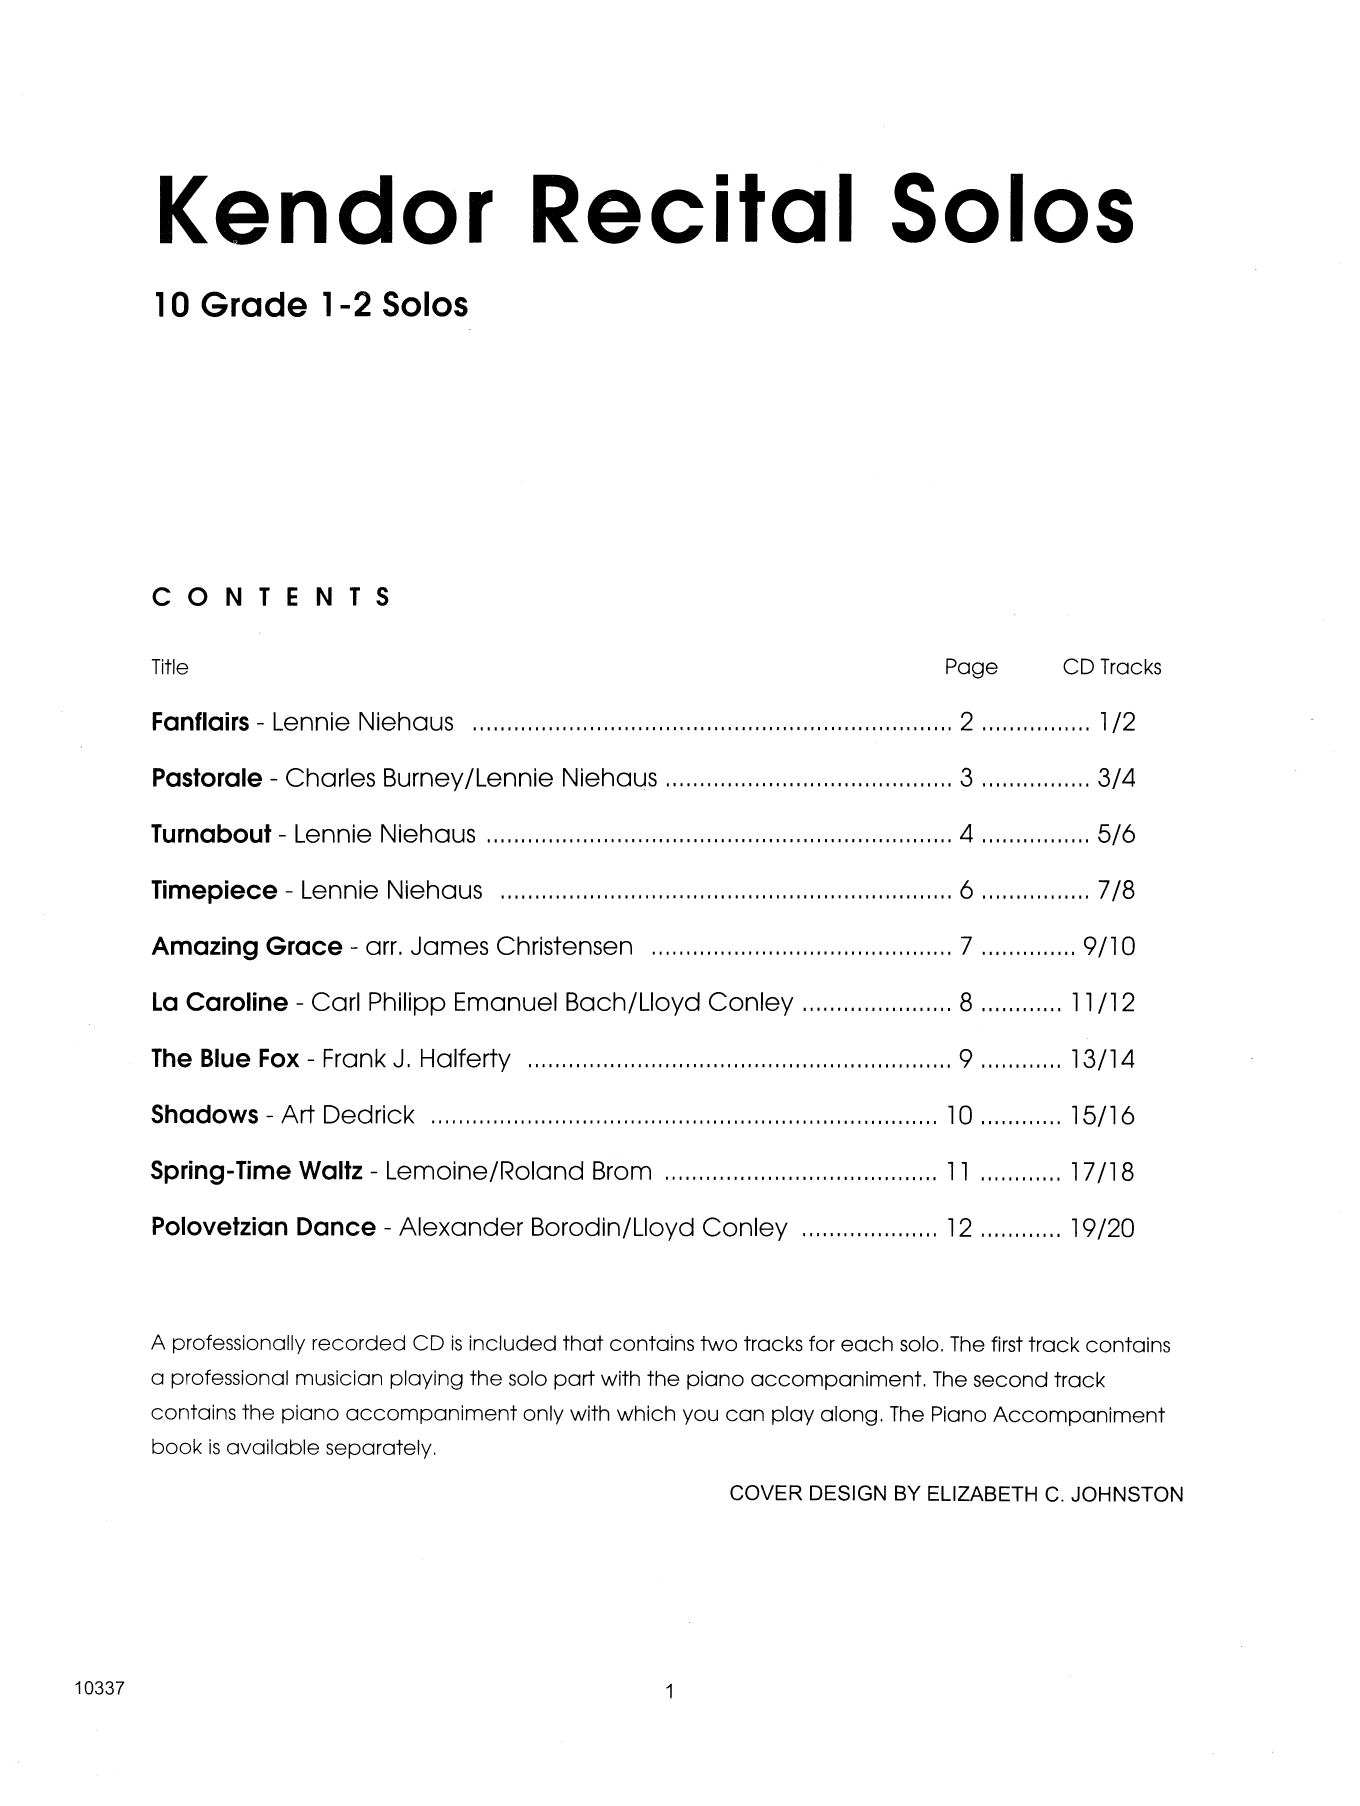 Download Various Kendor Recital Solos - Bb Tenor Saxopho Sheet Music